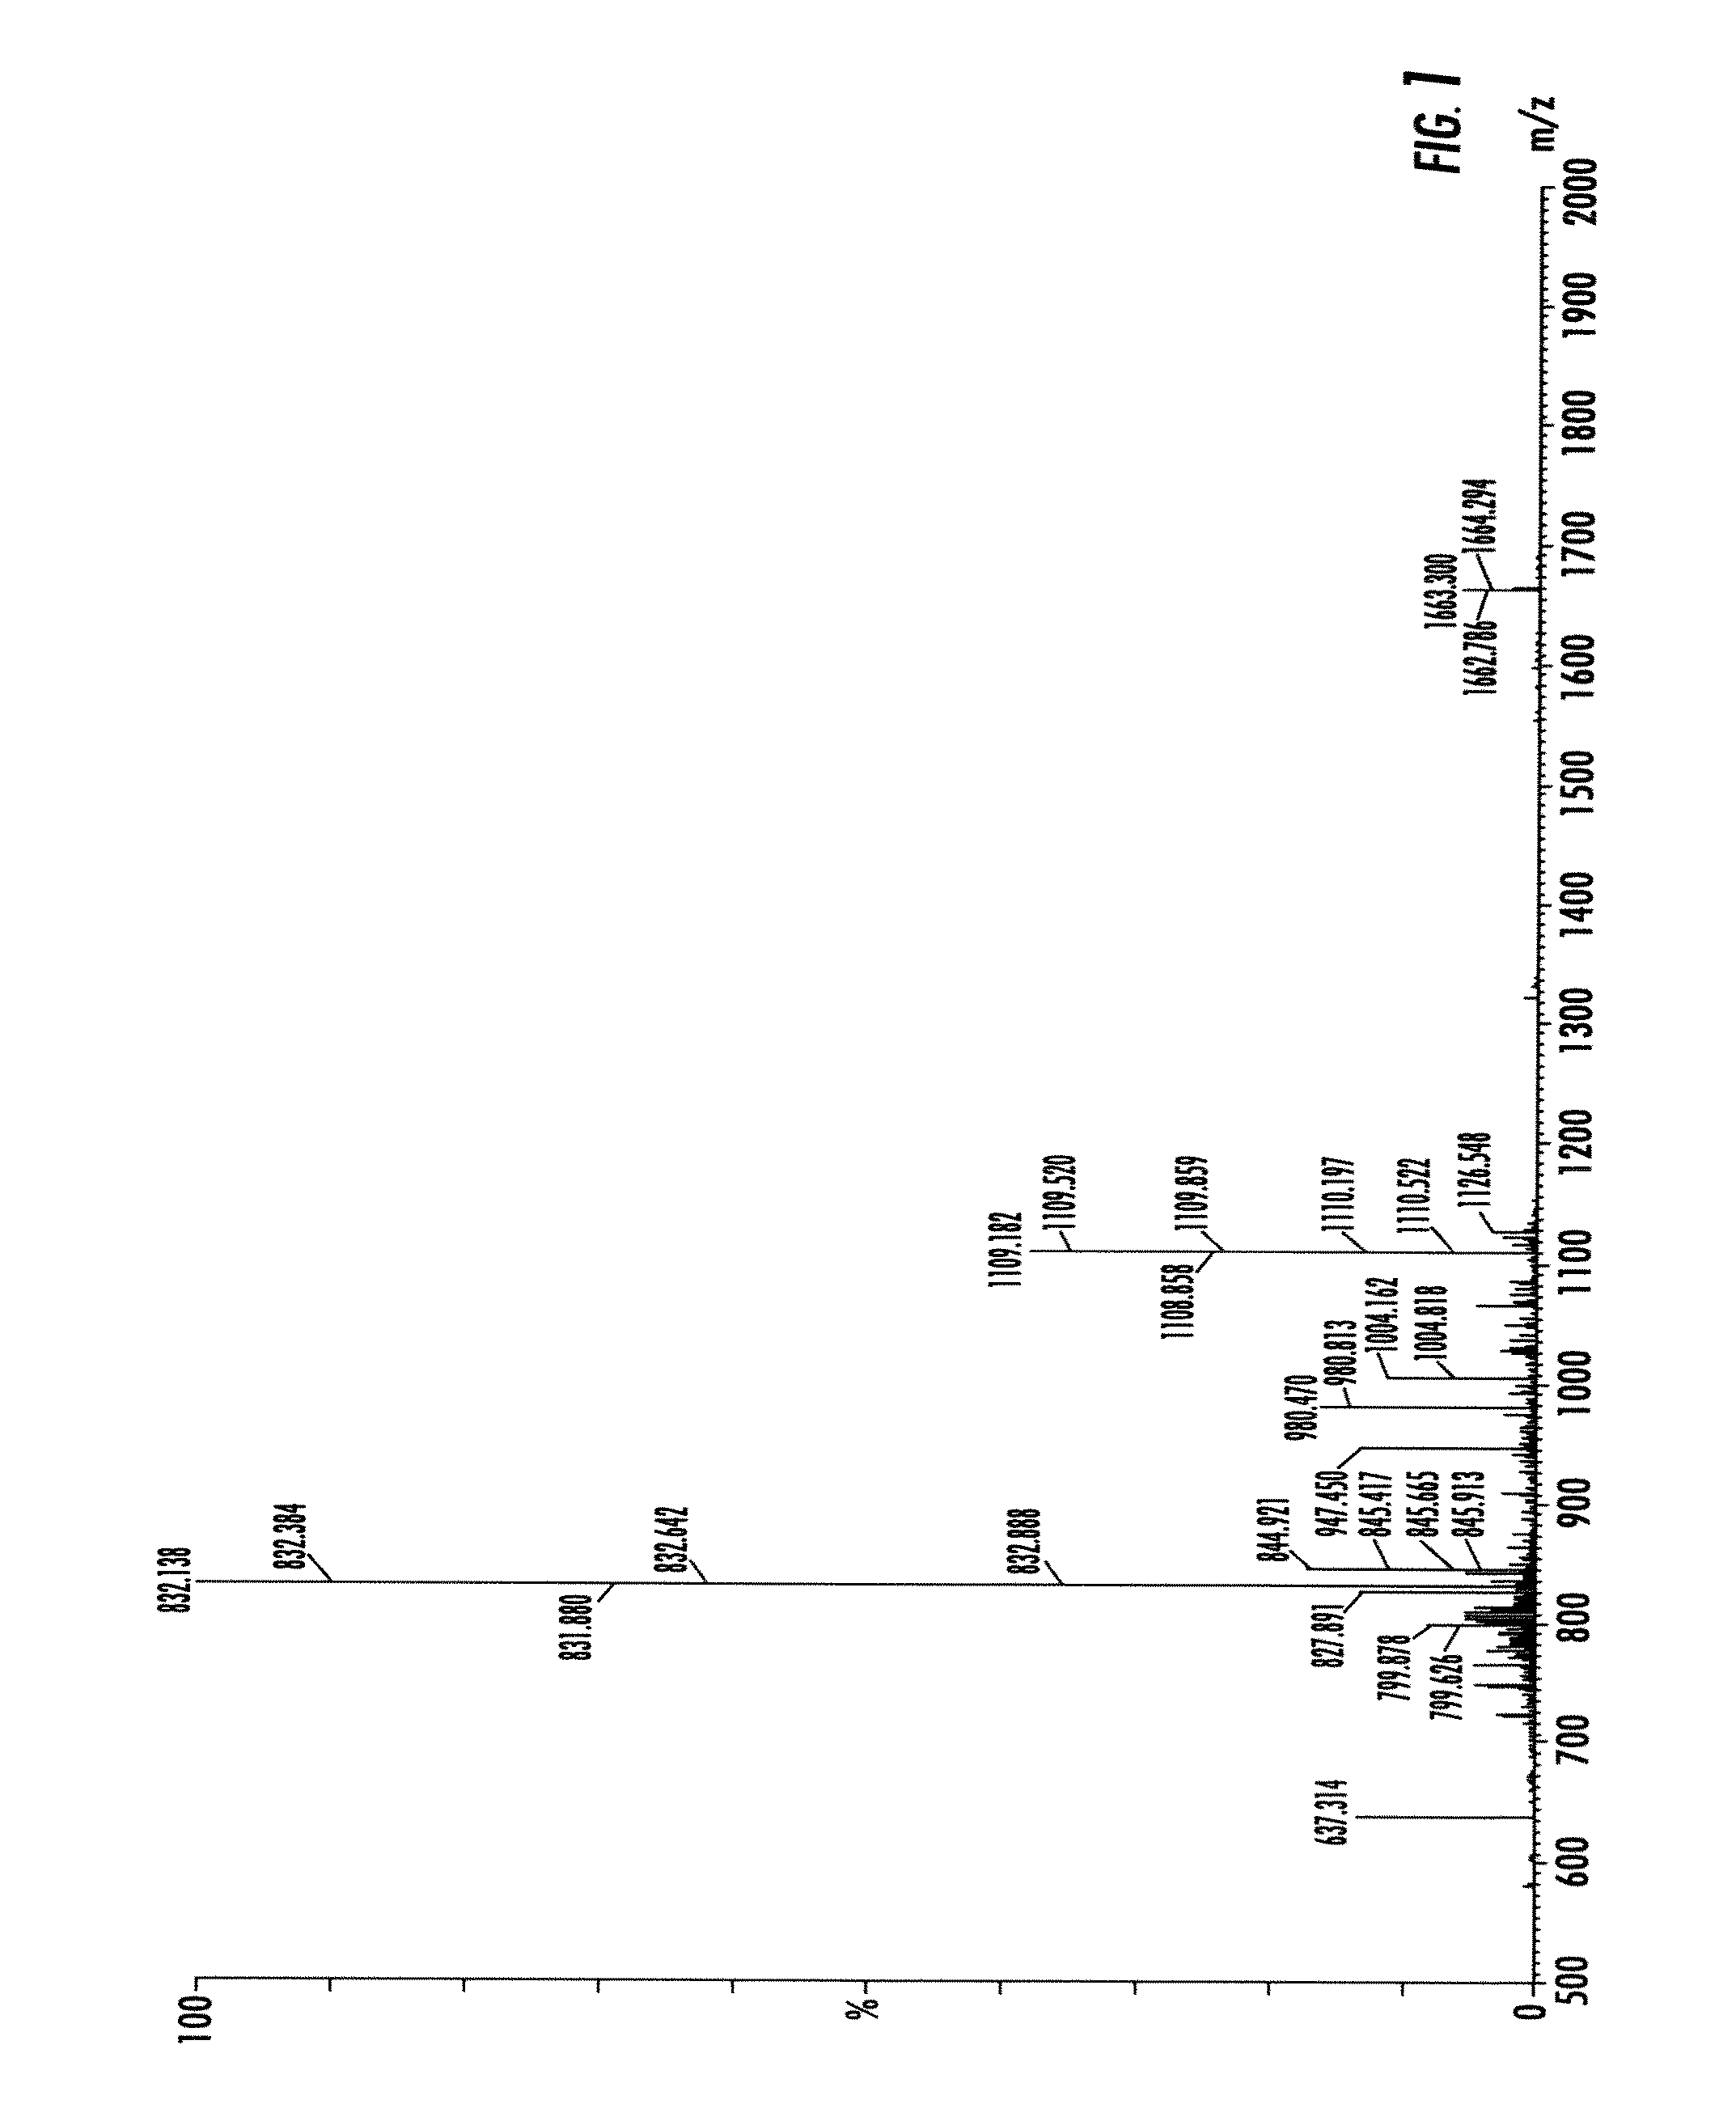 Derivates of Polyethylene Glycol Modified Thymosin Alpha 1